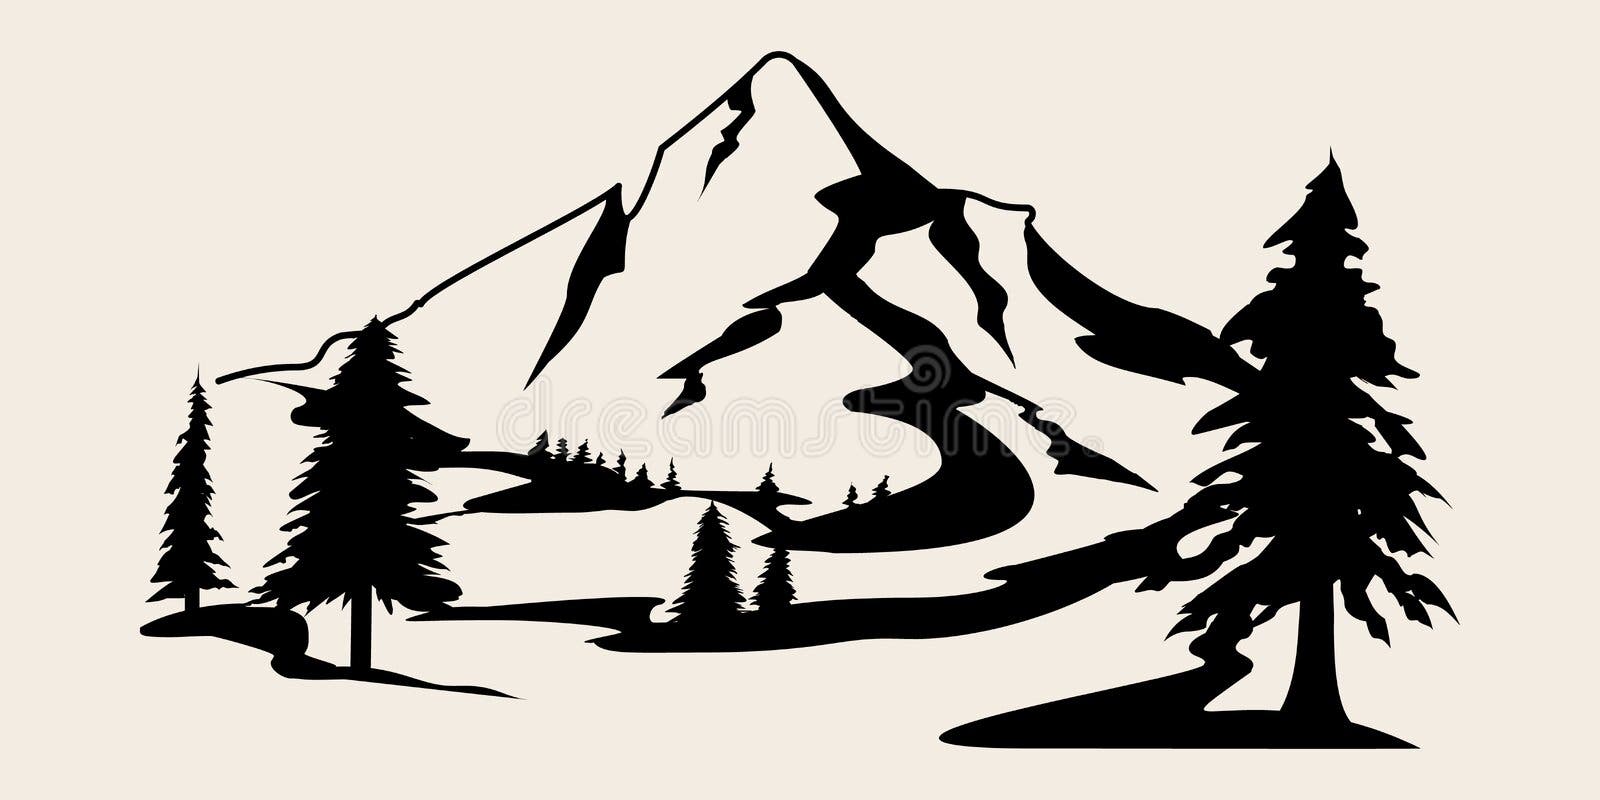 Mountains Vector.Mountain Range Silhouette Isolated Vector Illustration ...